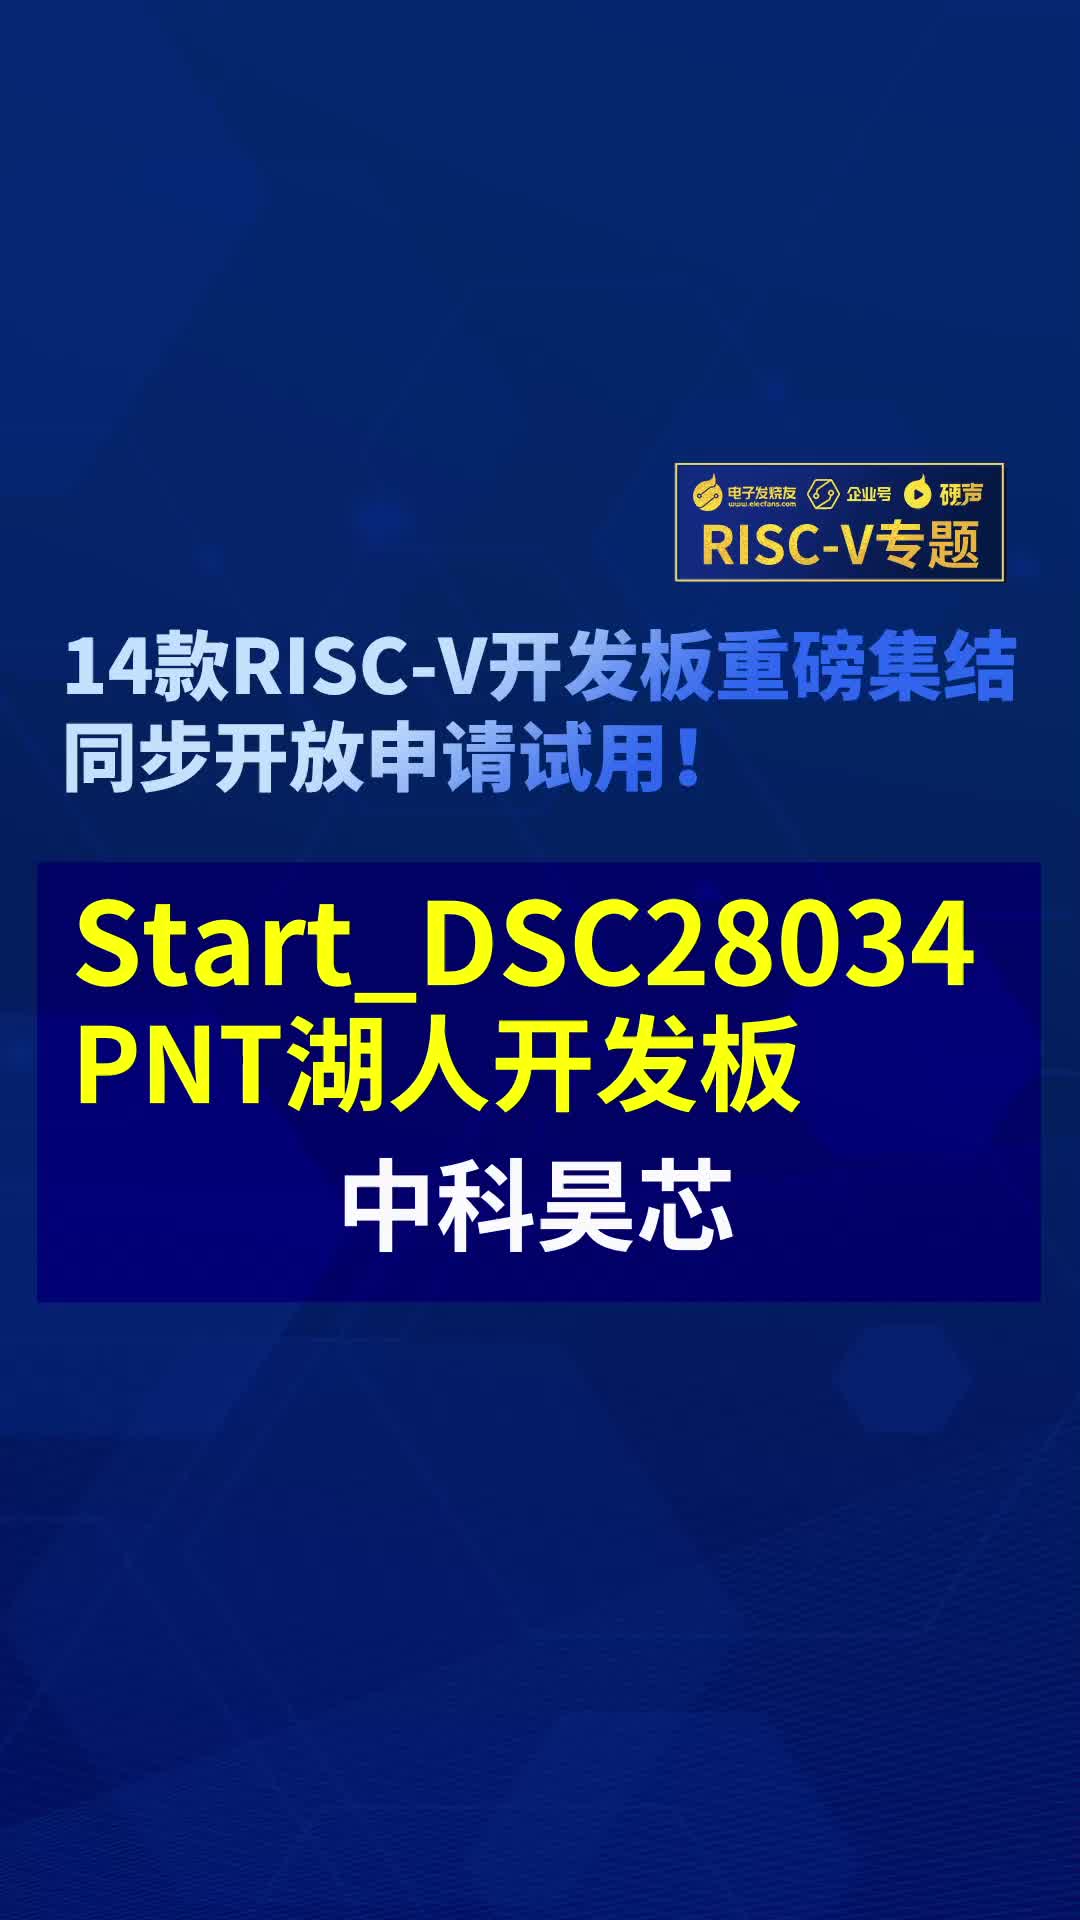 【RISC-V专题】中科昊芯Start_DSC28034PNT开发板试用#RISC-V开发板评测 